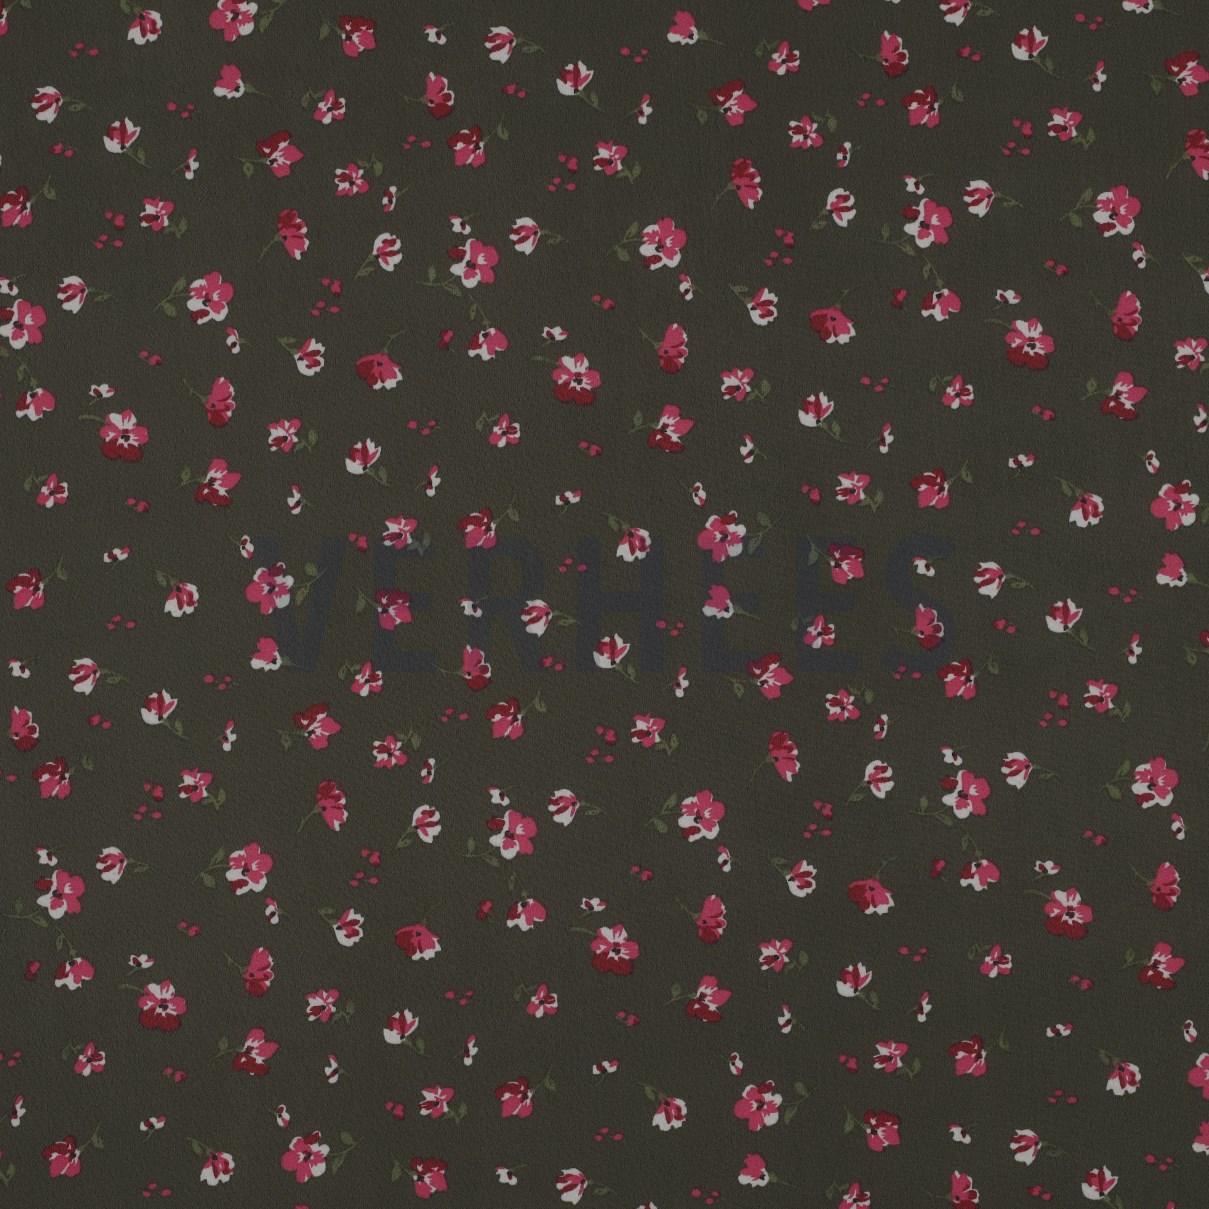 CHIFFON FLOWERS PICKLE (high resolution)